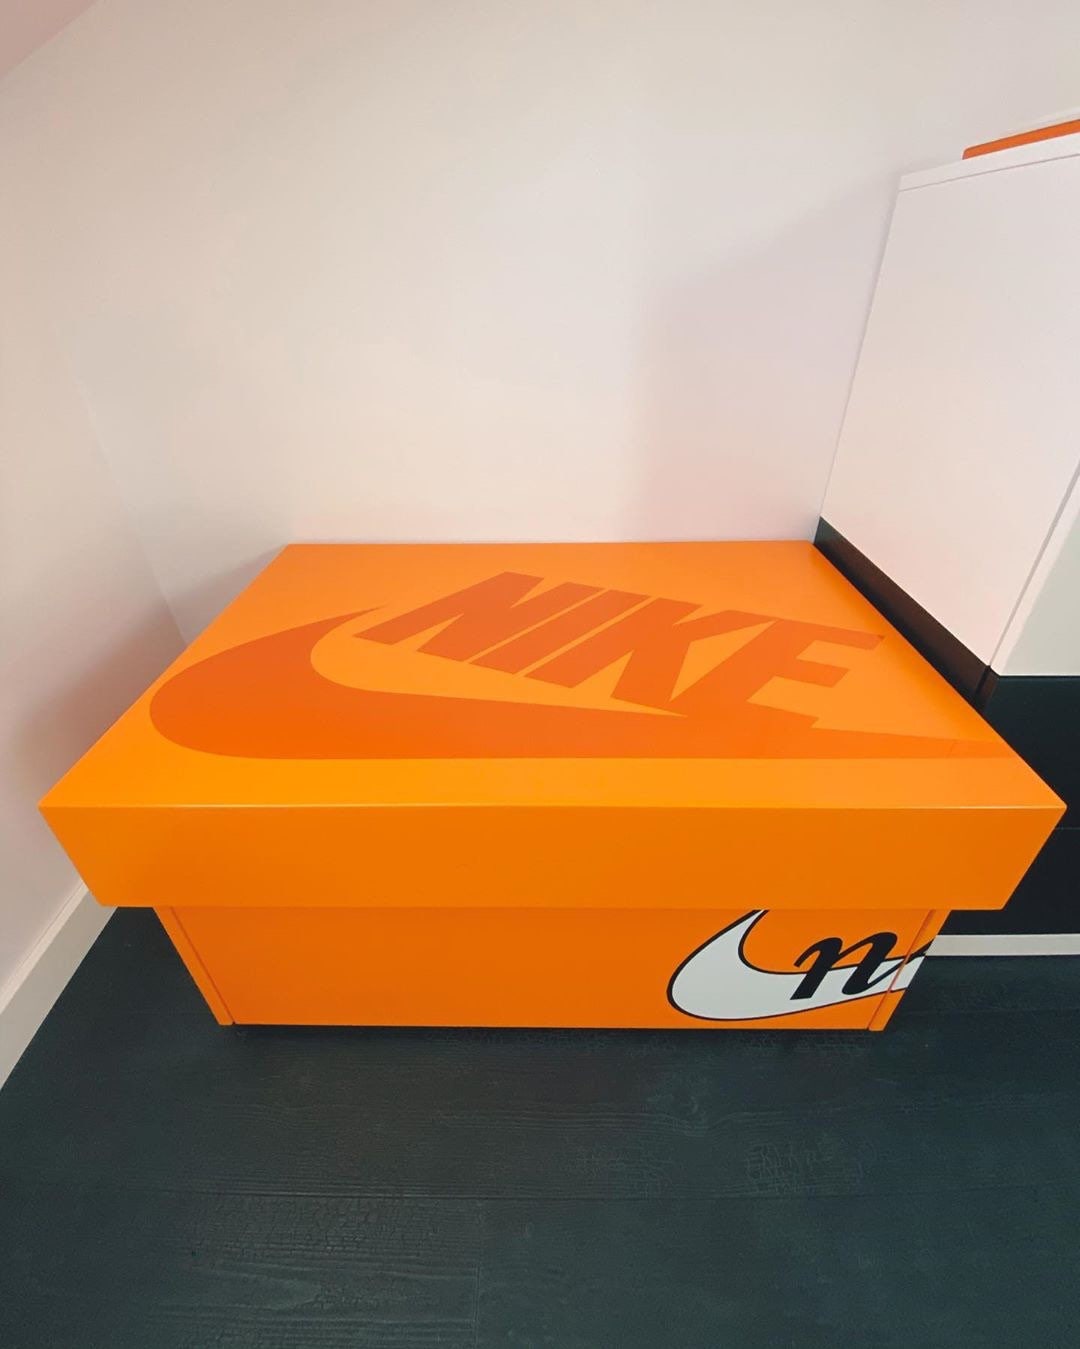 Giant Nike Shoe Box Chest 